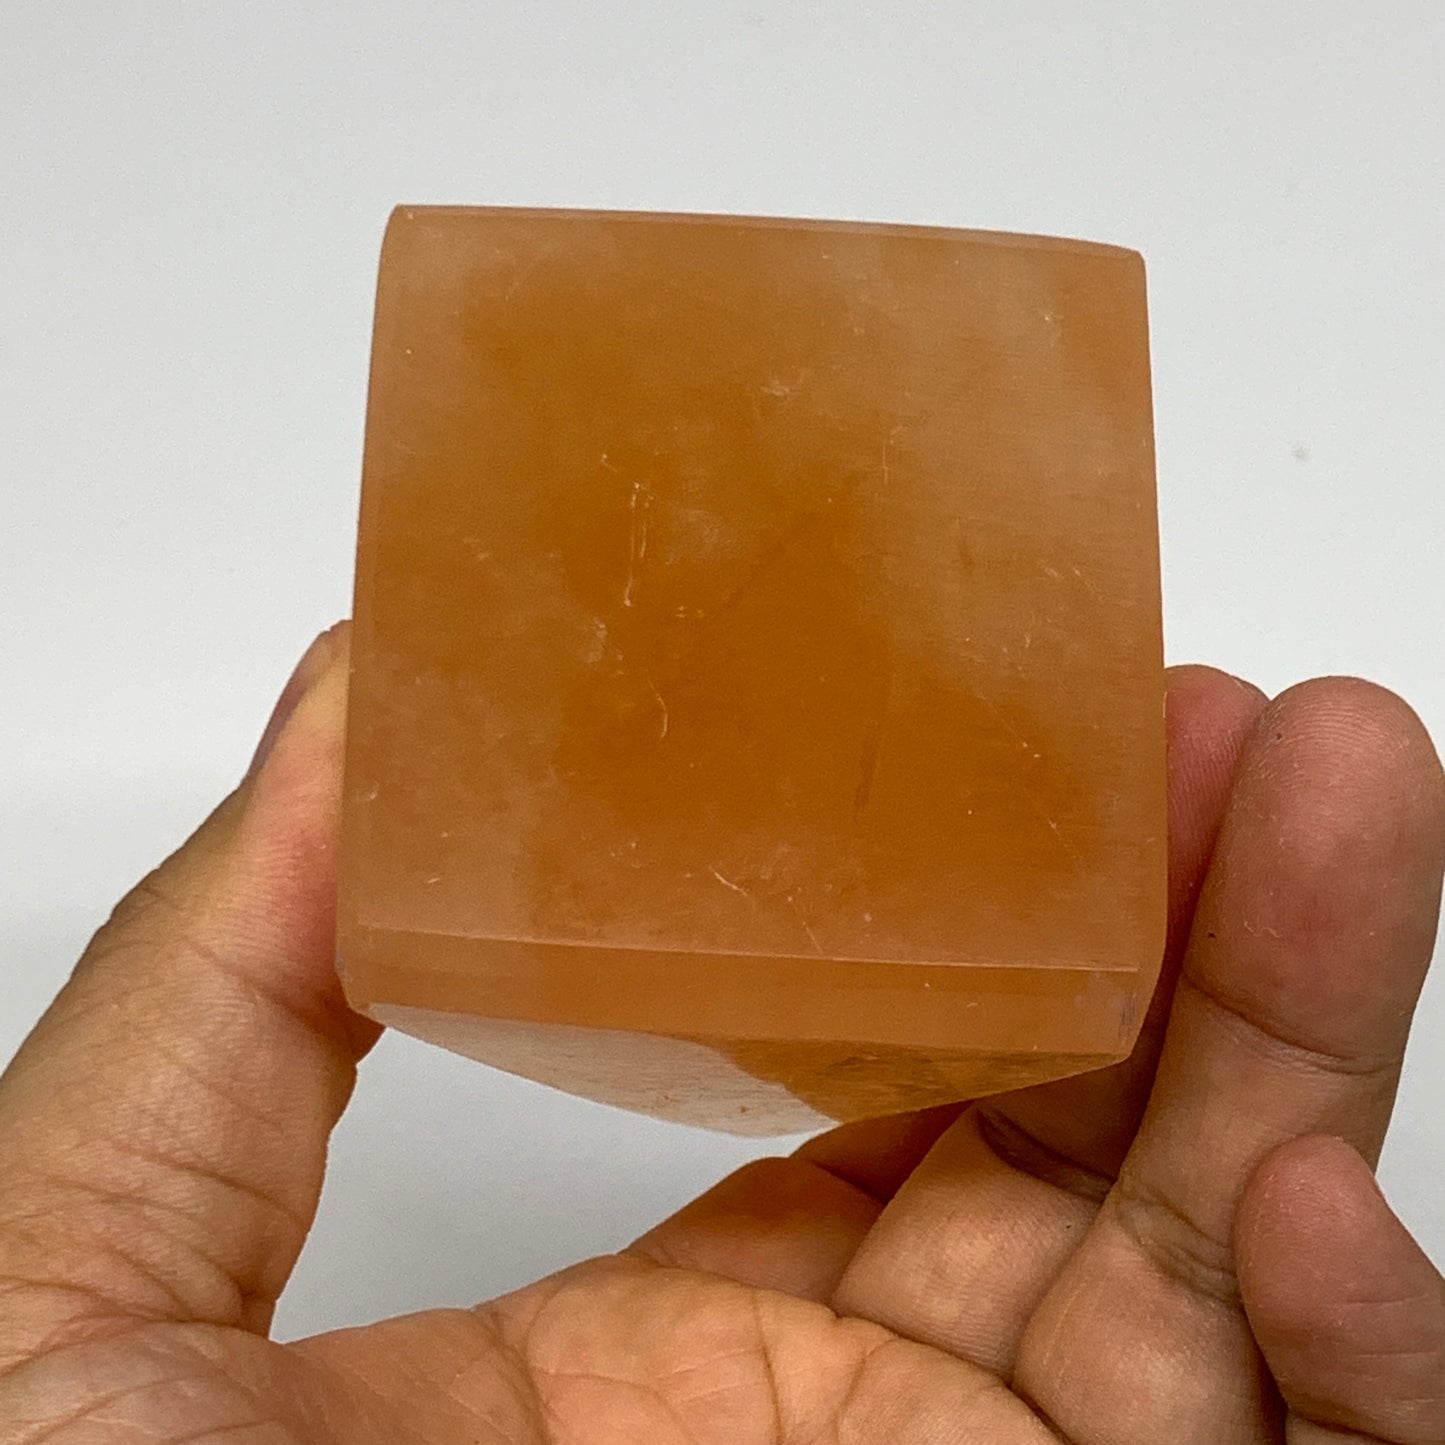 300g, 4.1"x2.3"  Orange Selenite/Satin Spar Pyramid Crystal @Morocco, B24220